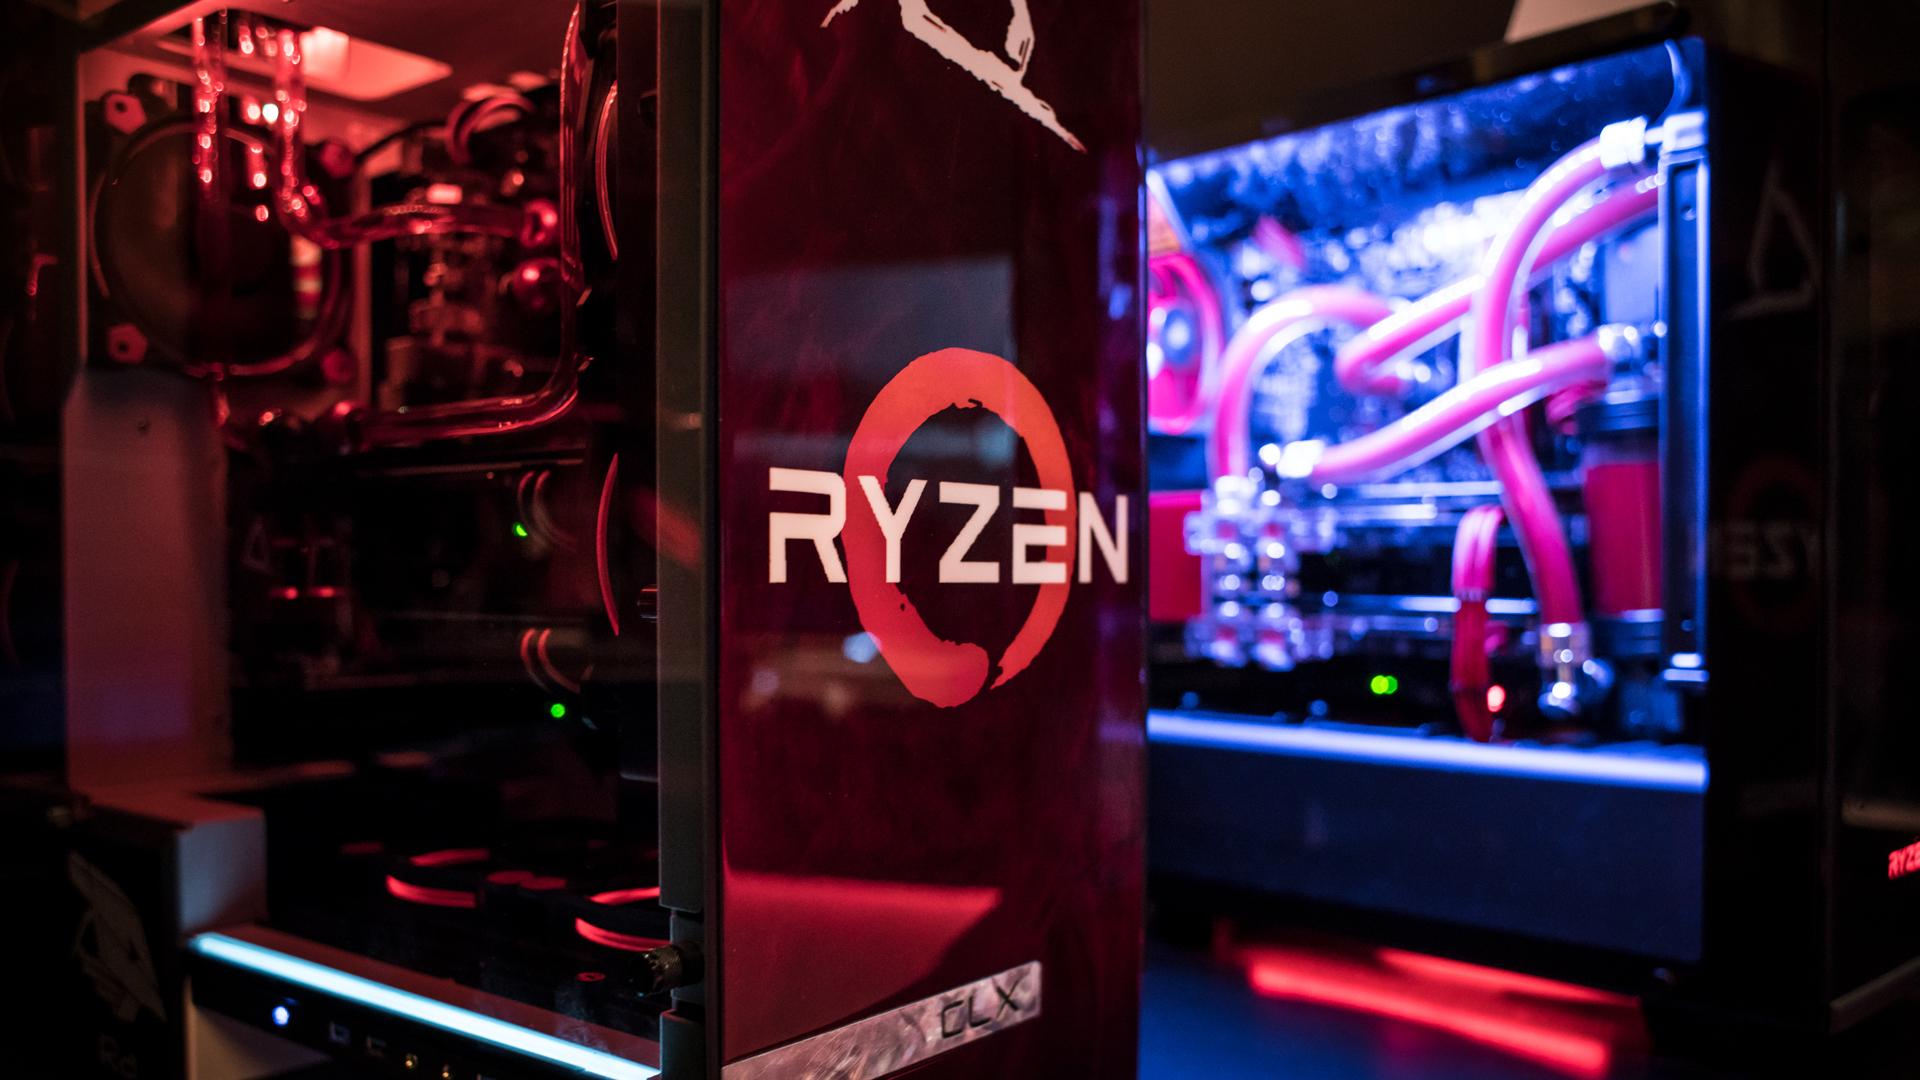 Procesor AMD Ryzen 3